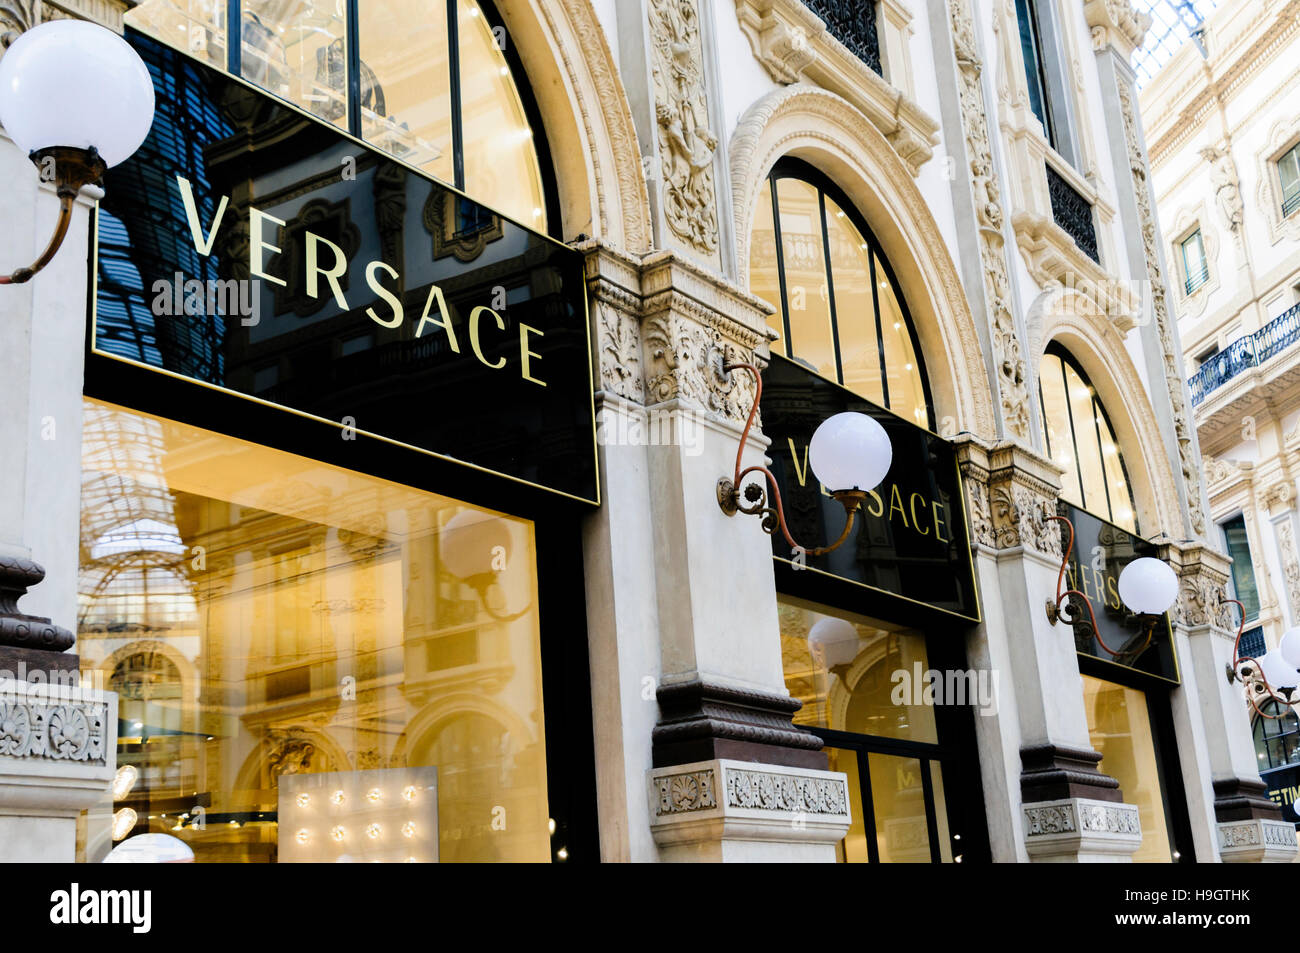 Versace shop in Galleria Vittorio Emanuele II, a shopping arcade specialising in designer clothing, Milan, Italy. Stock Photo